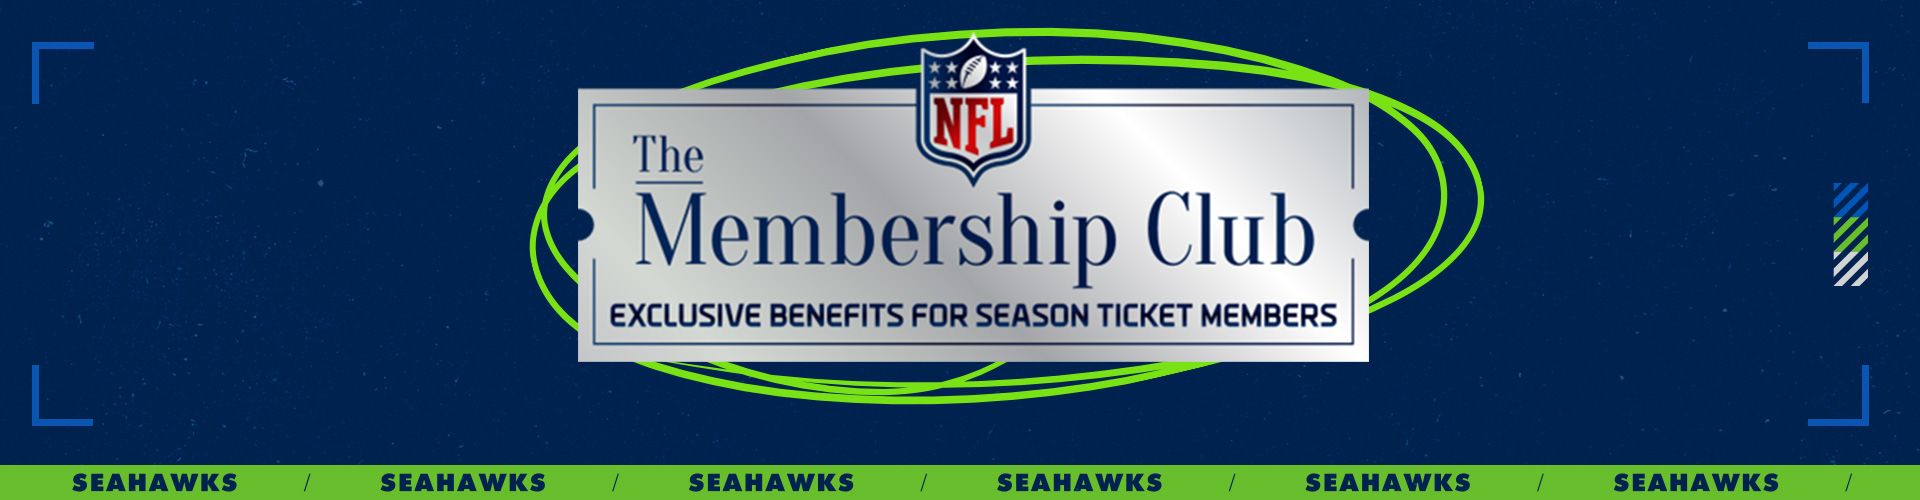 seahawks club tickets